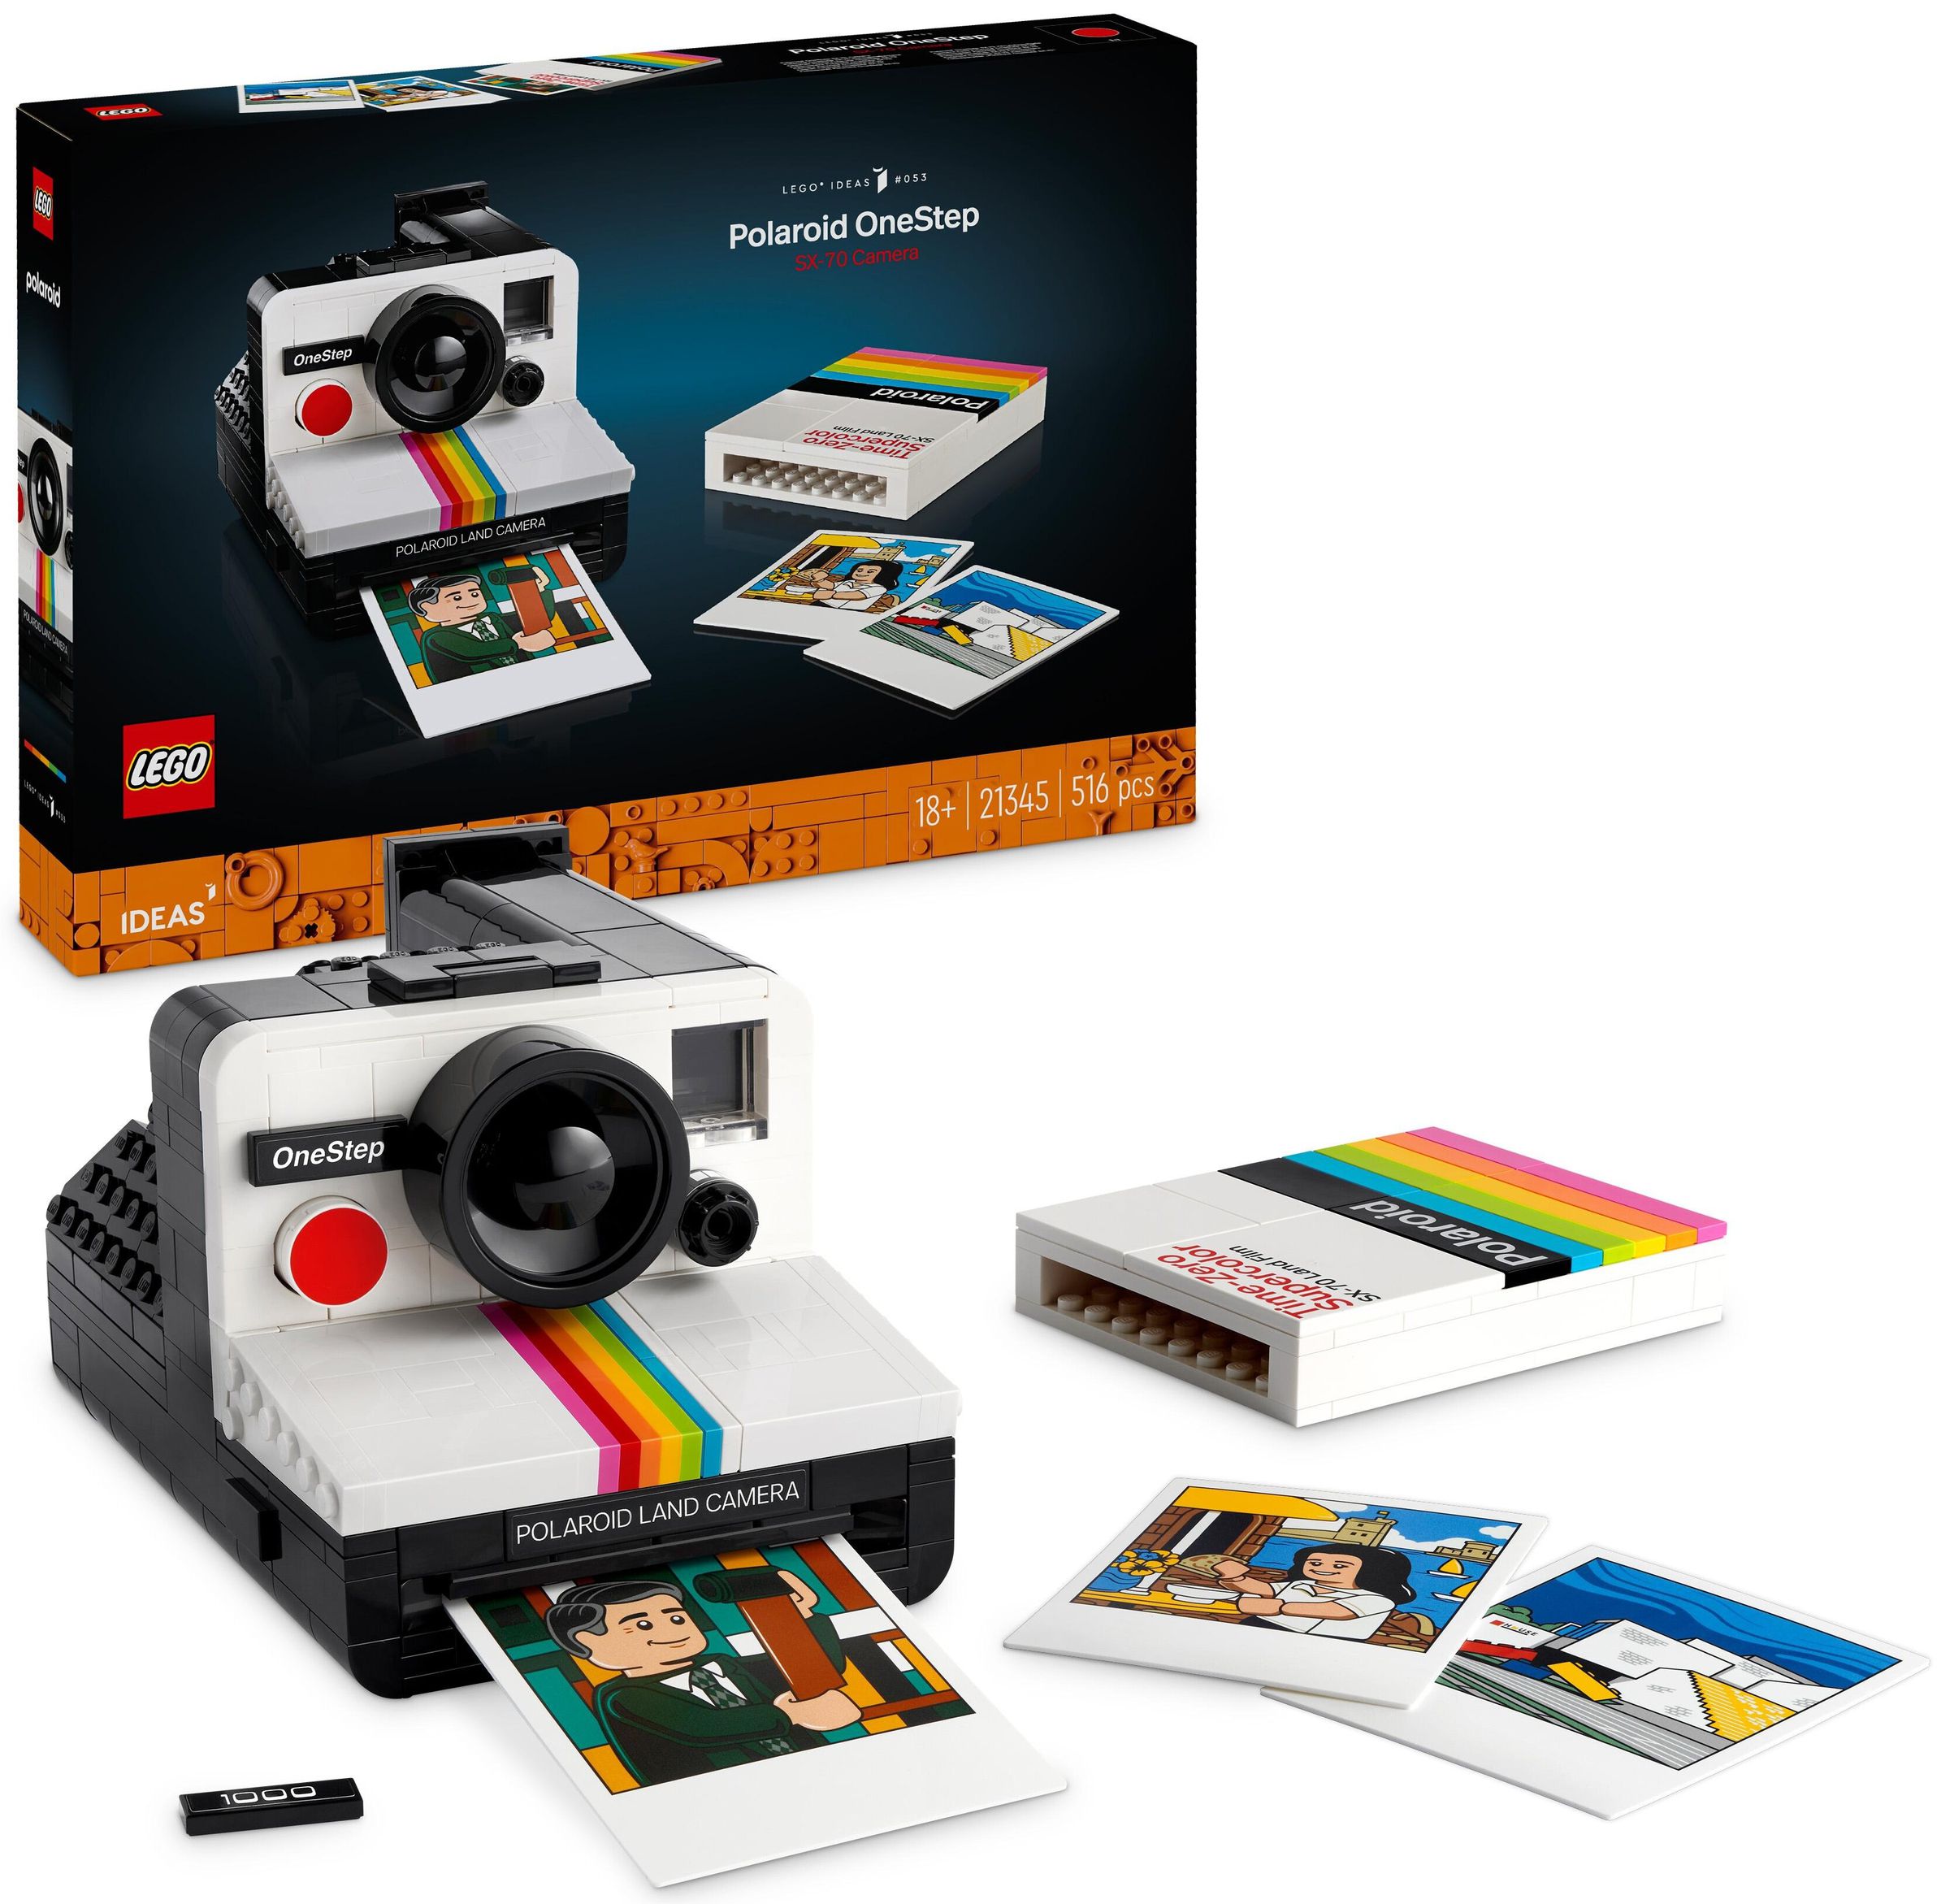 A photo of the Lego Polaroid camera next to some photos and the box.